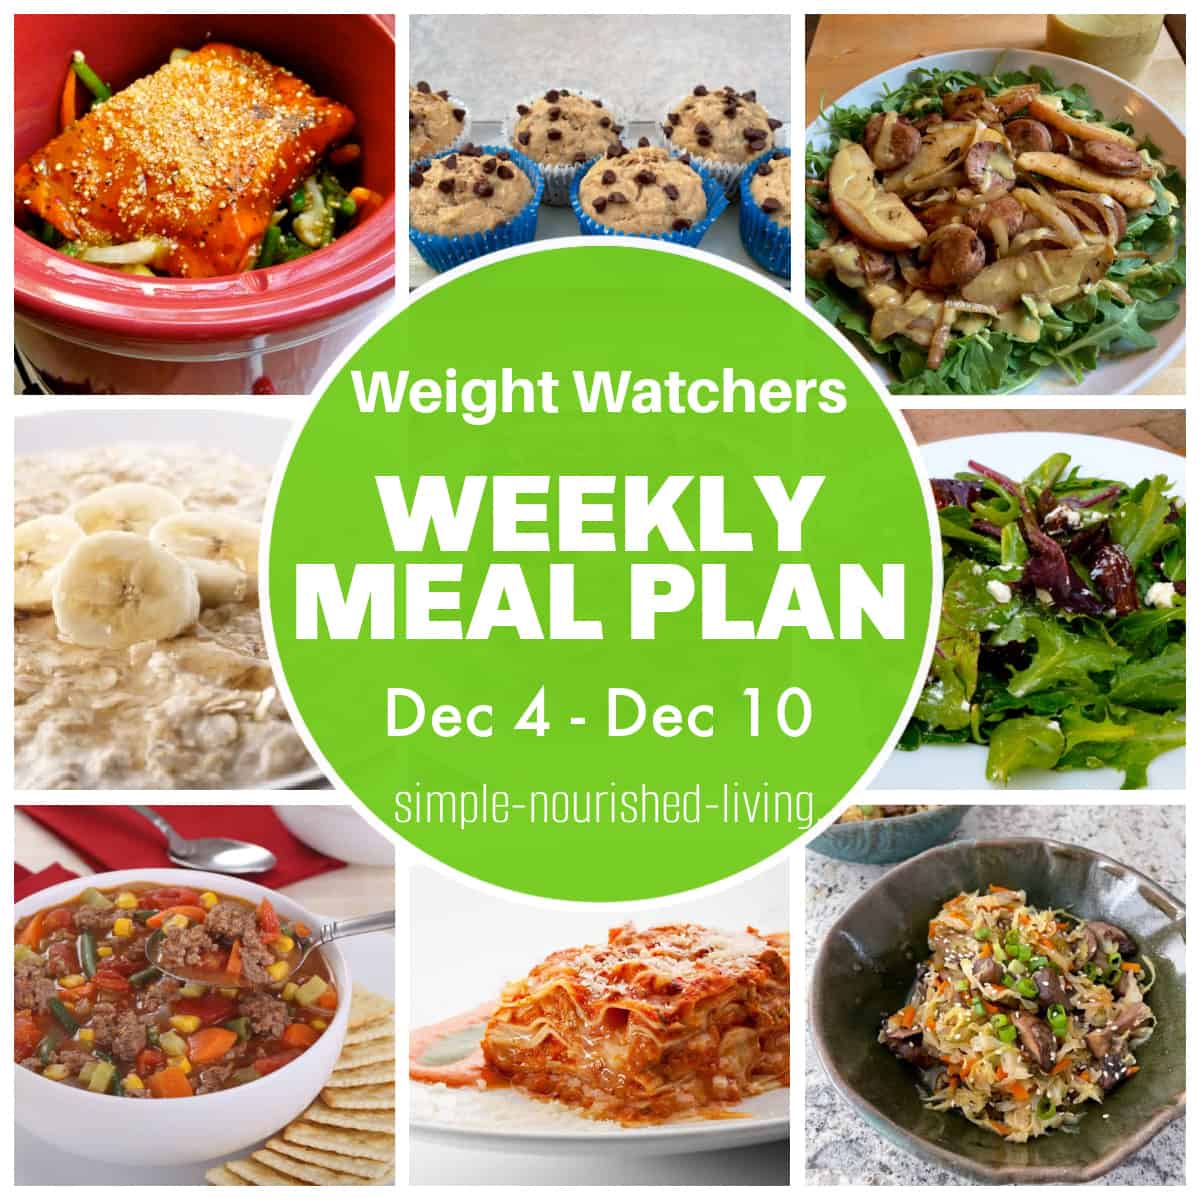 WW Weekly Meal Plan Dec 4